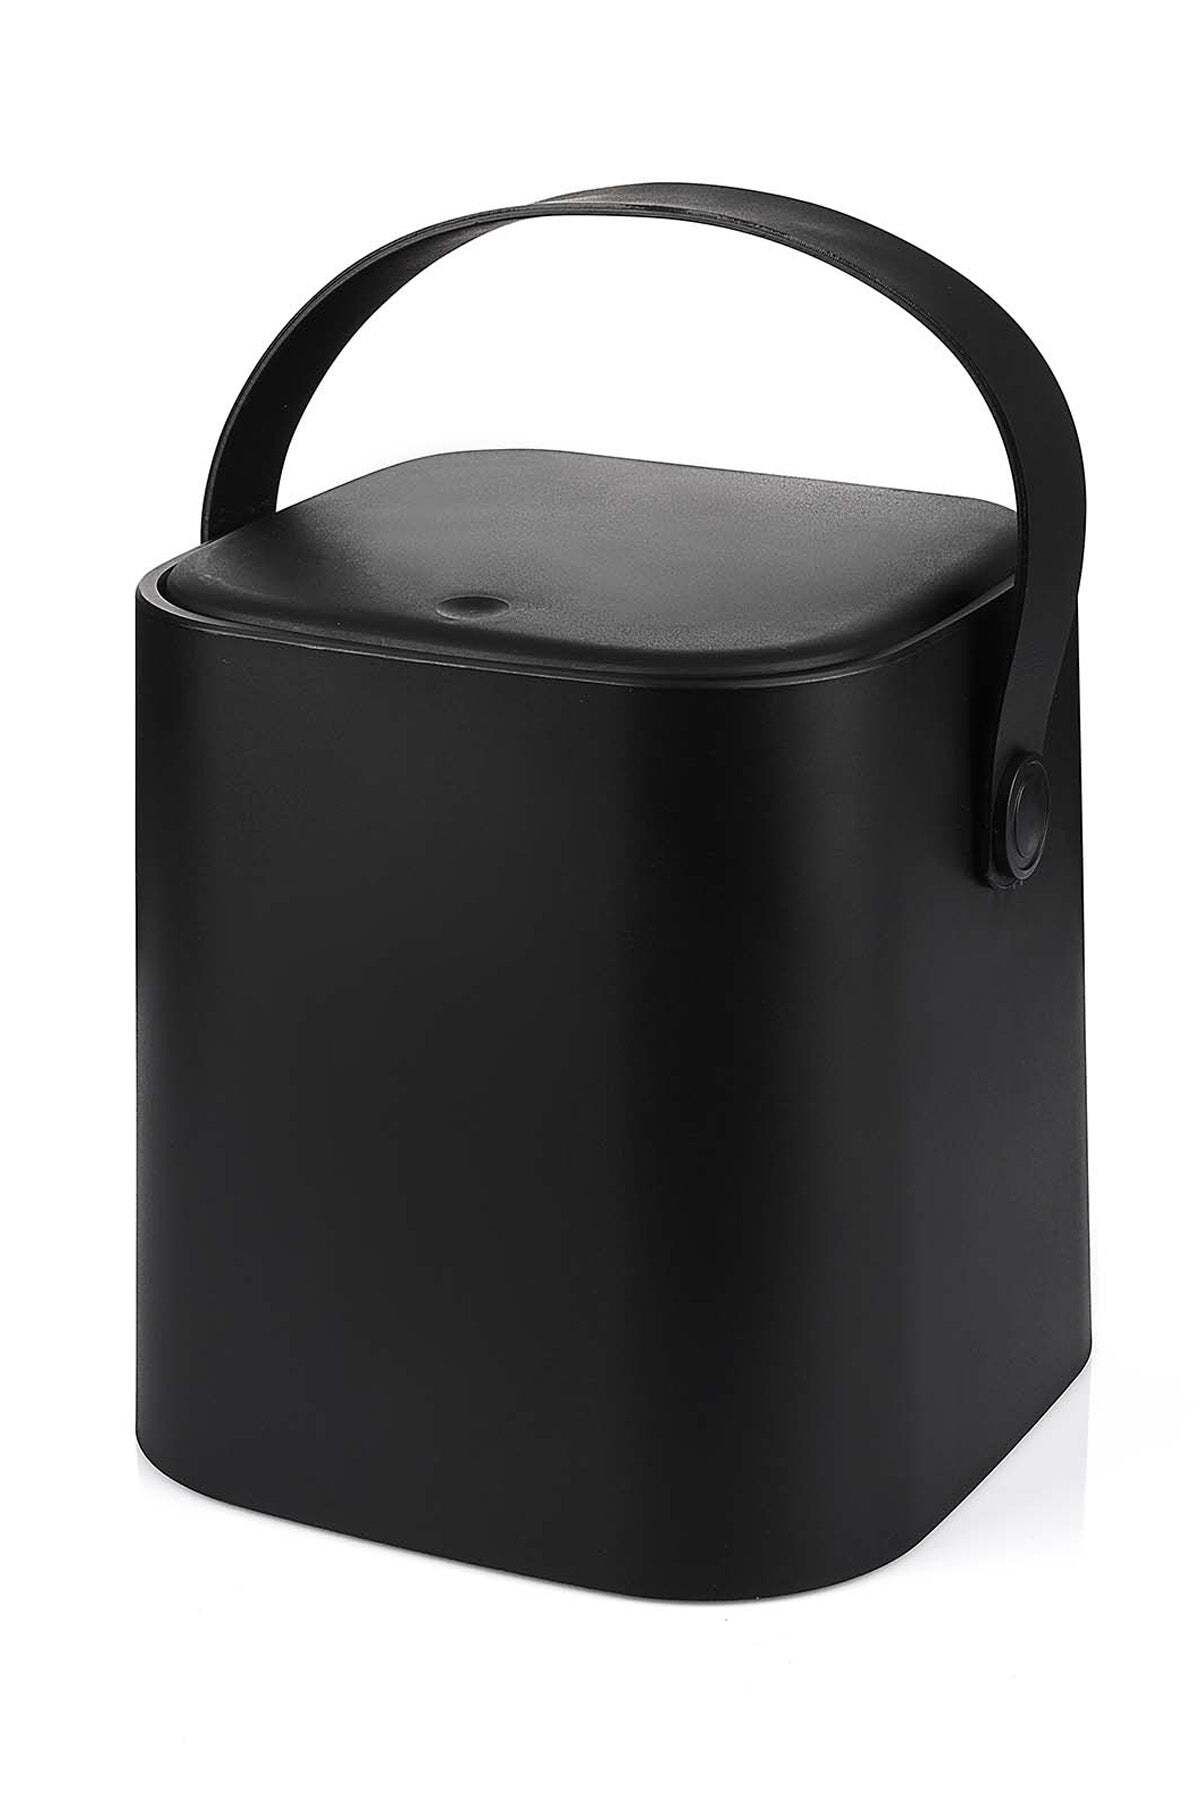 Tuffex Buysell Click Kapaklı Tutma Saplı Iç Kovalı Tezgah Üstü Mutfak Ve Banyo Çöp Kovası 4 Lt - Siyah